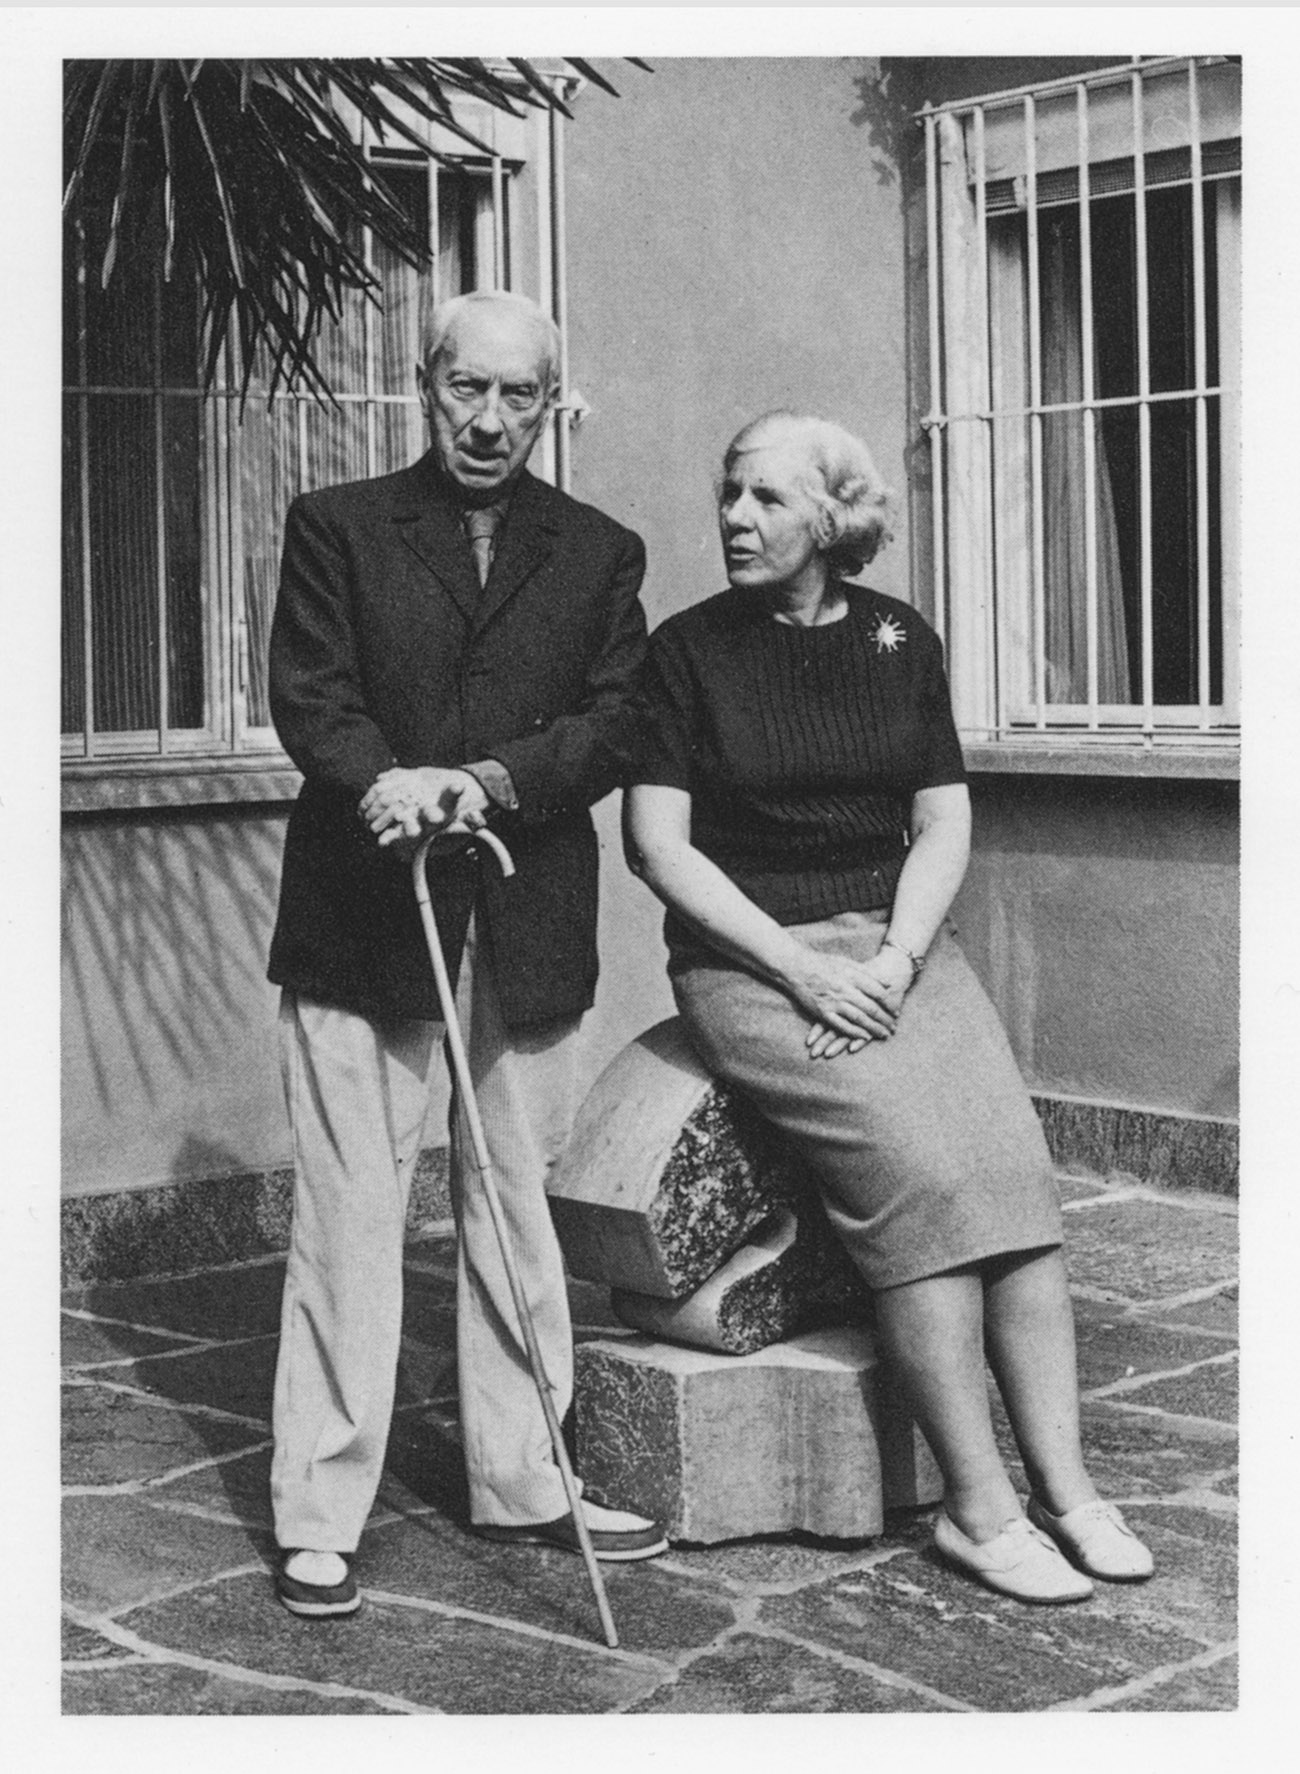 Marguerite und Hans Arp vor ihrem Atelierhaus “Ronco dei Fiori”, Locarno. 1965. Fondazione Marguerite Arp, Locarno. Foto: Liliana Holländer